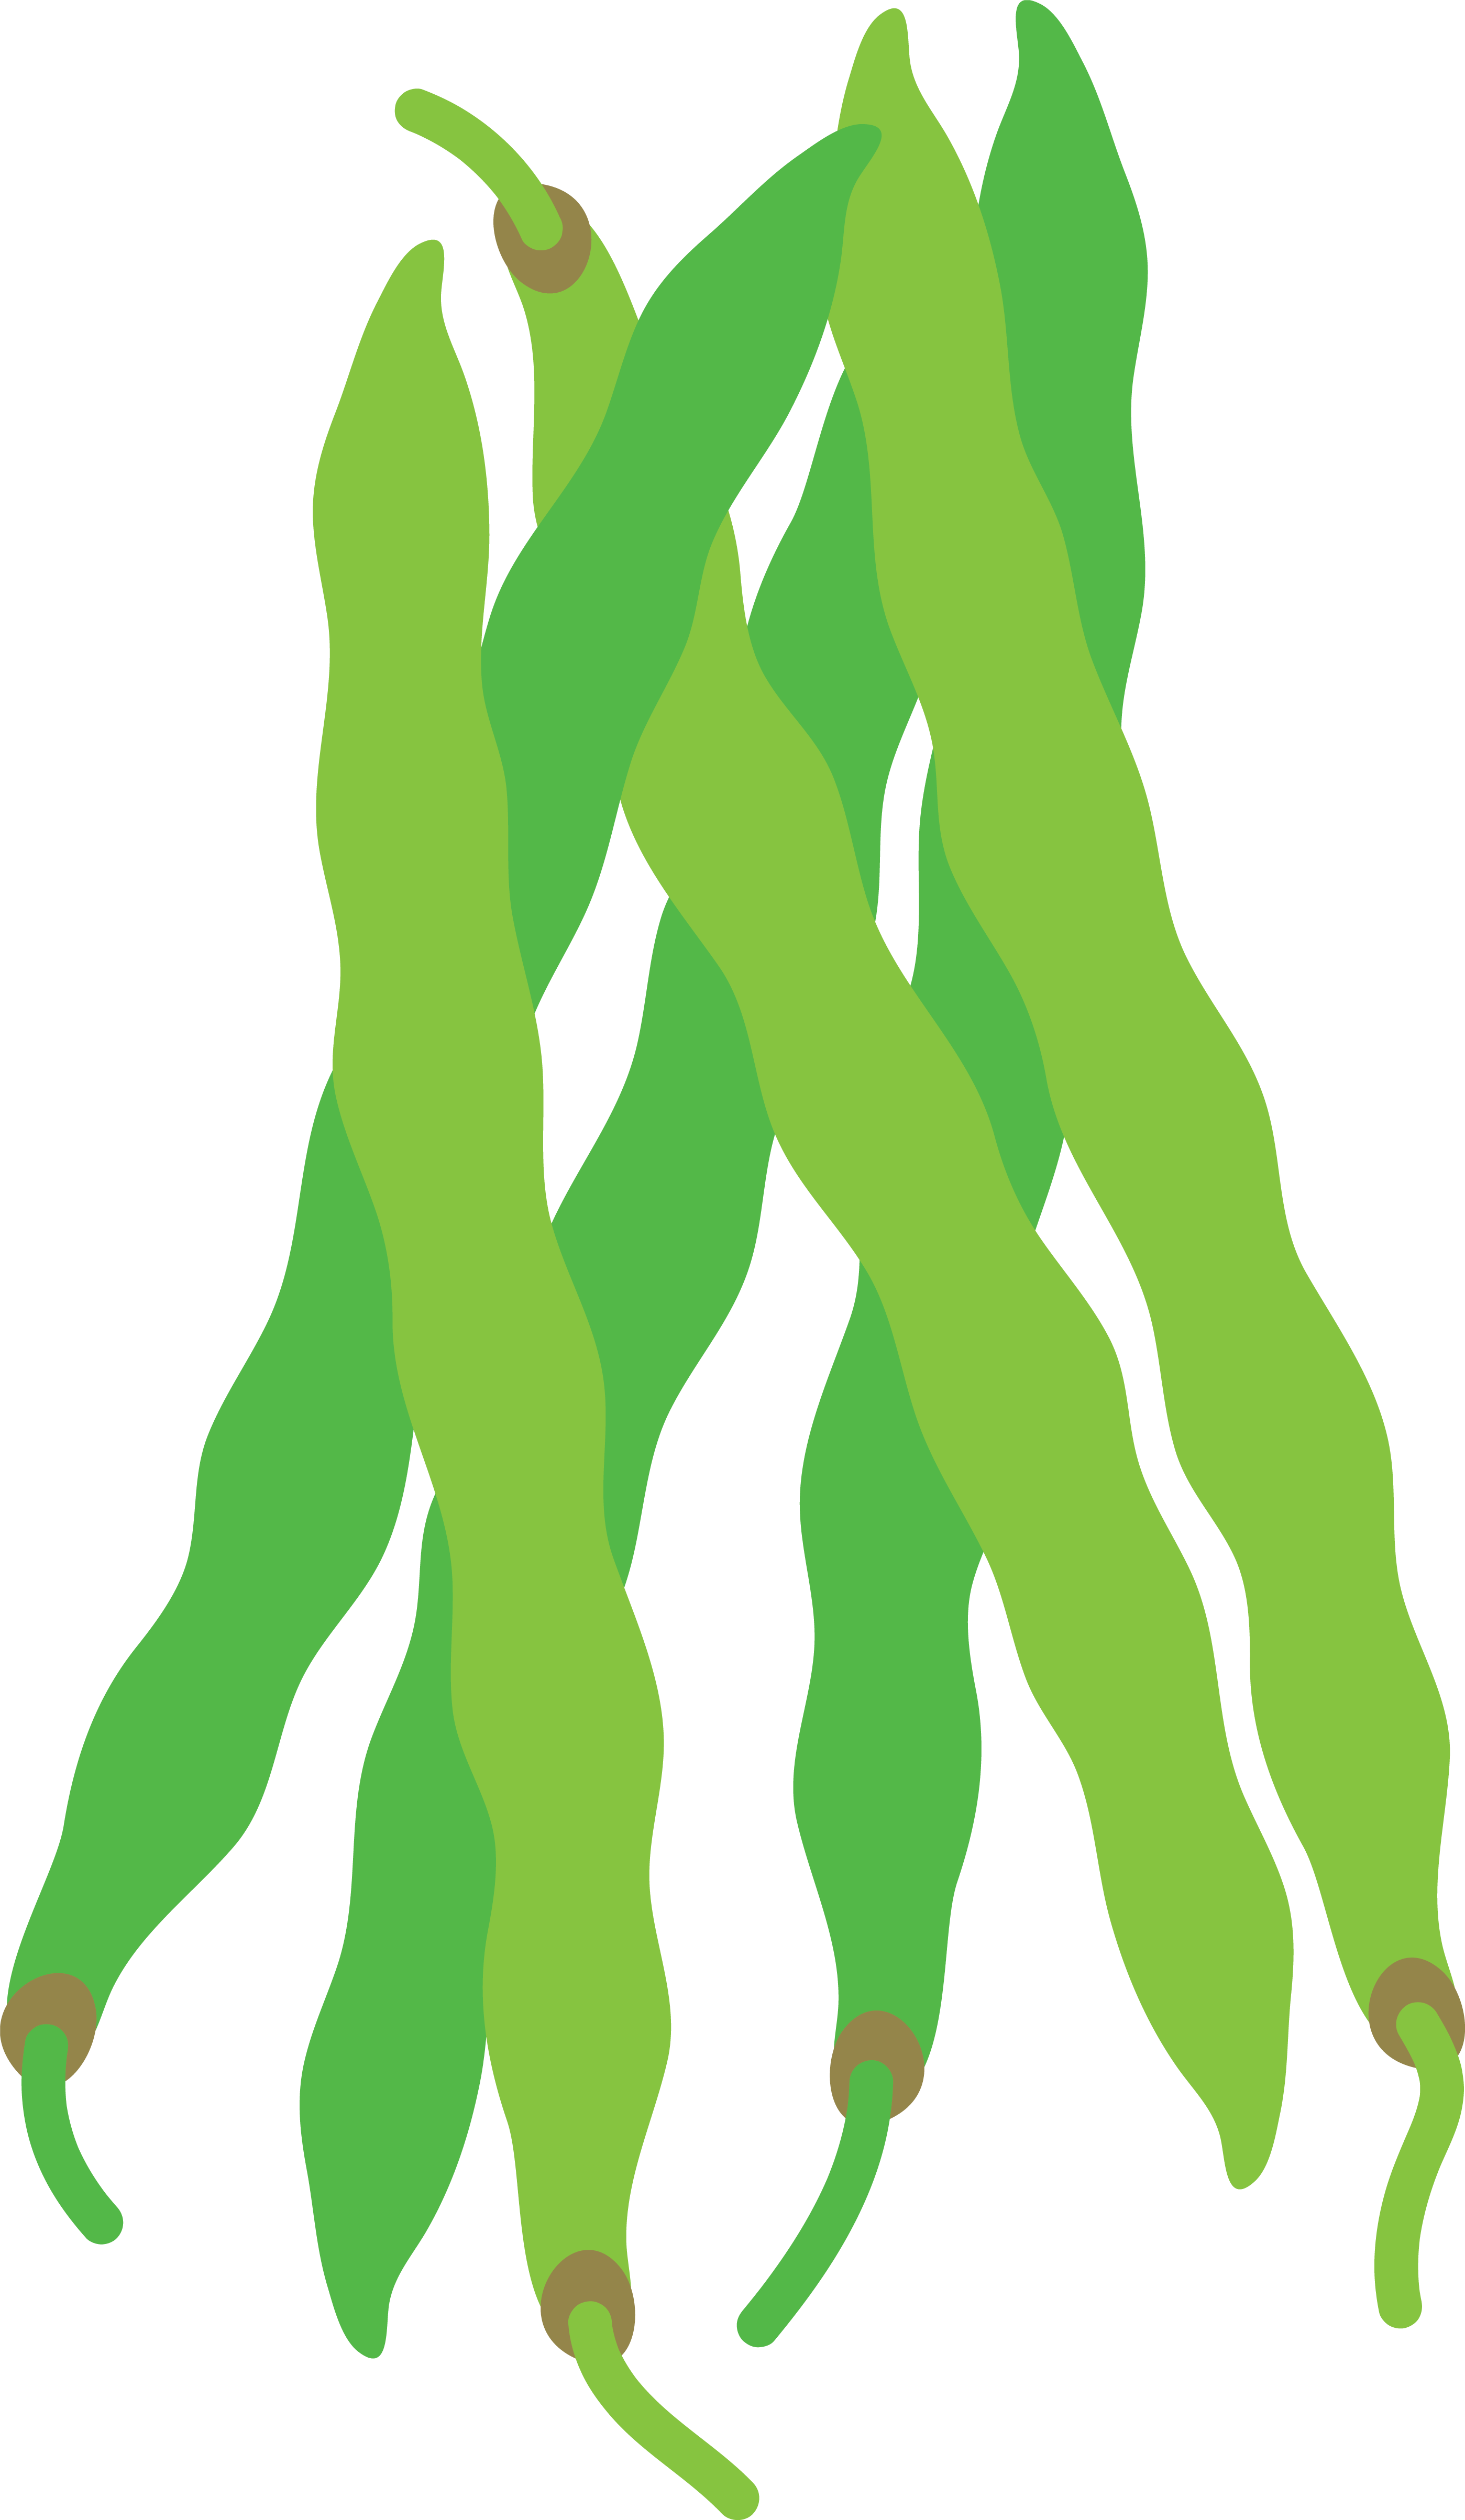 Green Beans_Pile icon